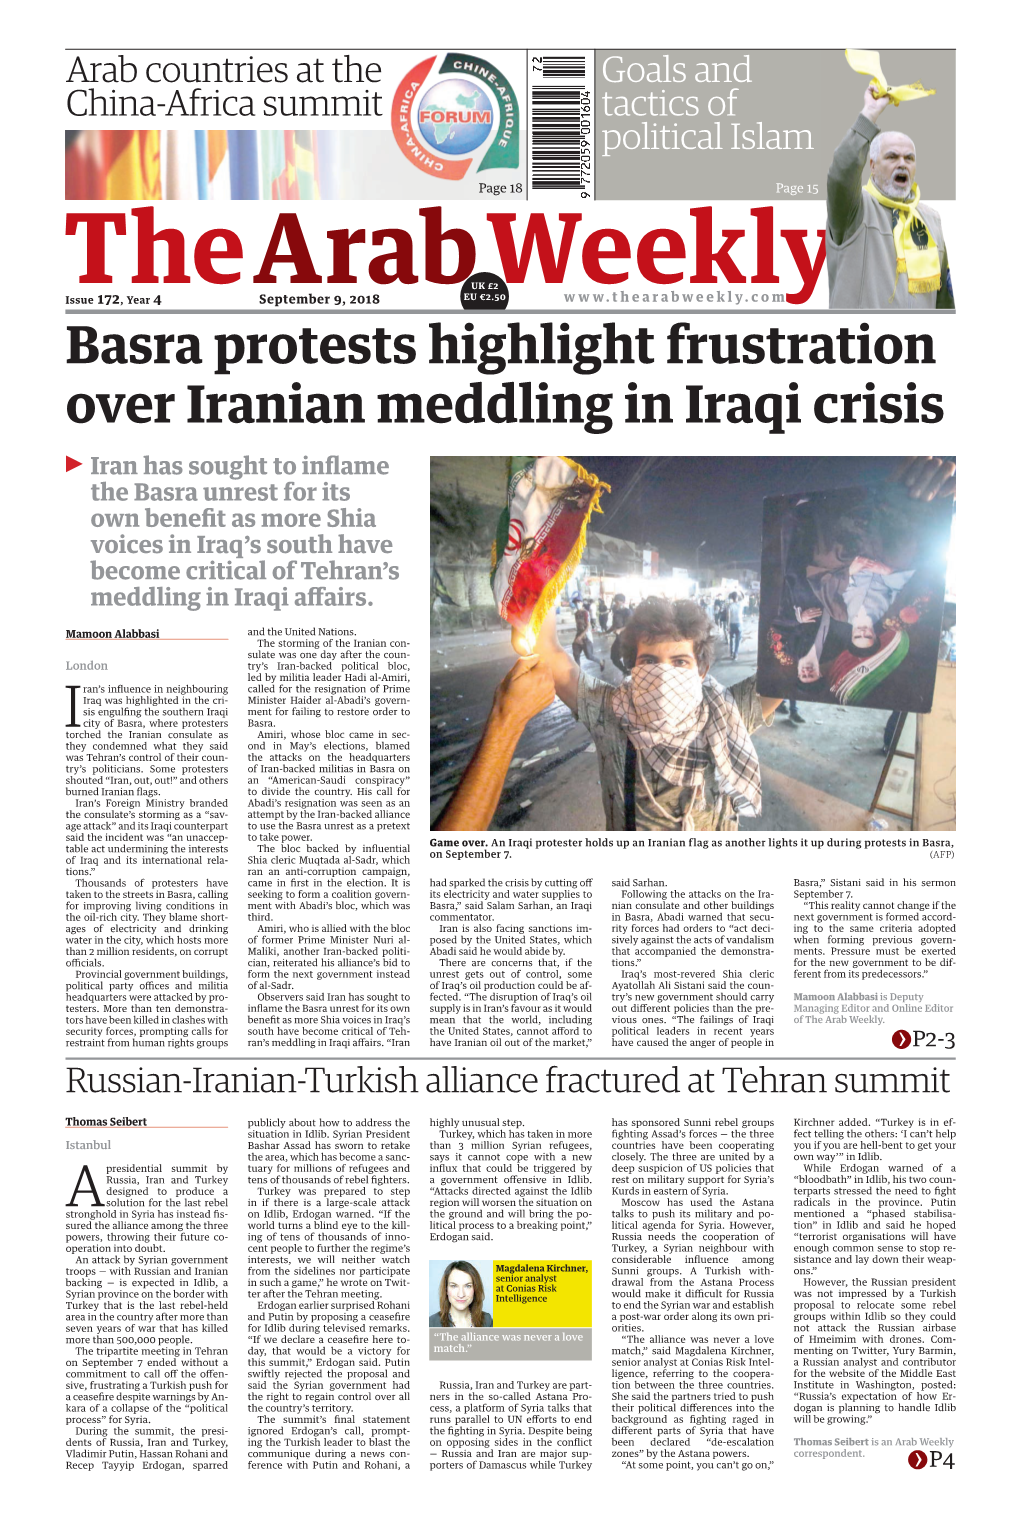 Basra Protests Highlight Frustration Over Iranian Meddling in Iraqi Crisis